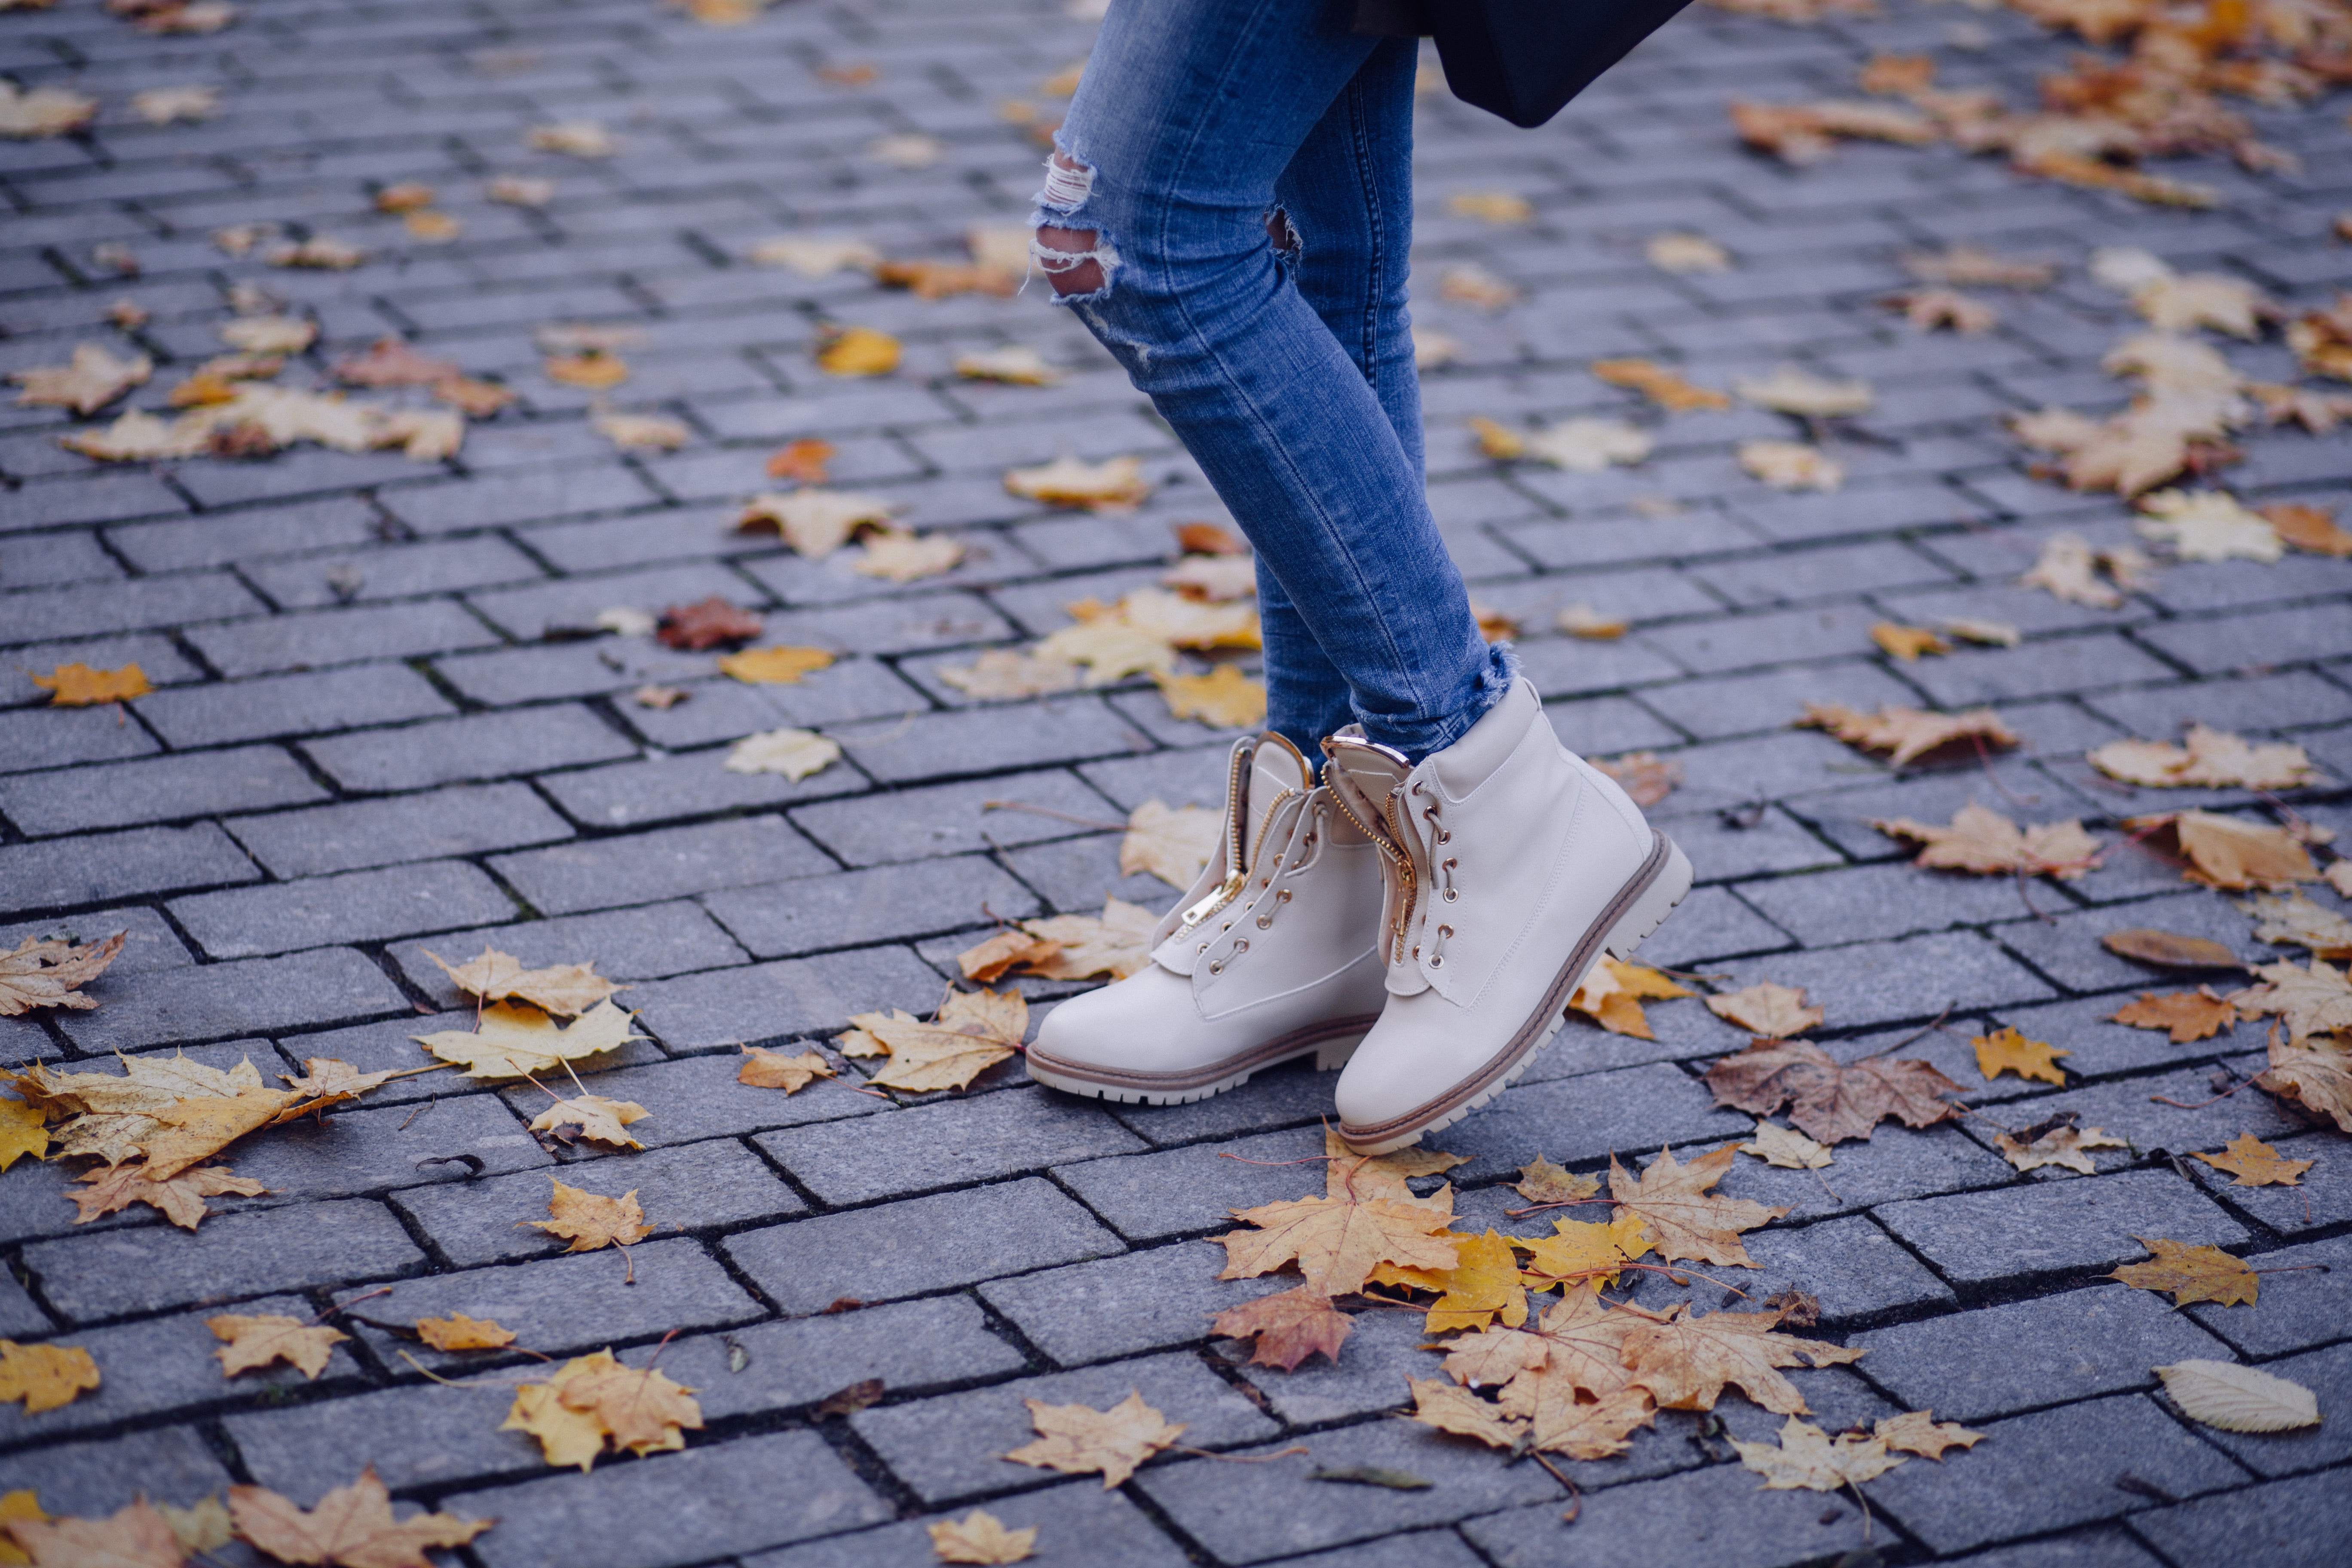 jeans, autumn, miscellanea, miscellaneous, legs, footwear